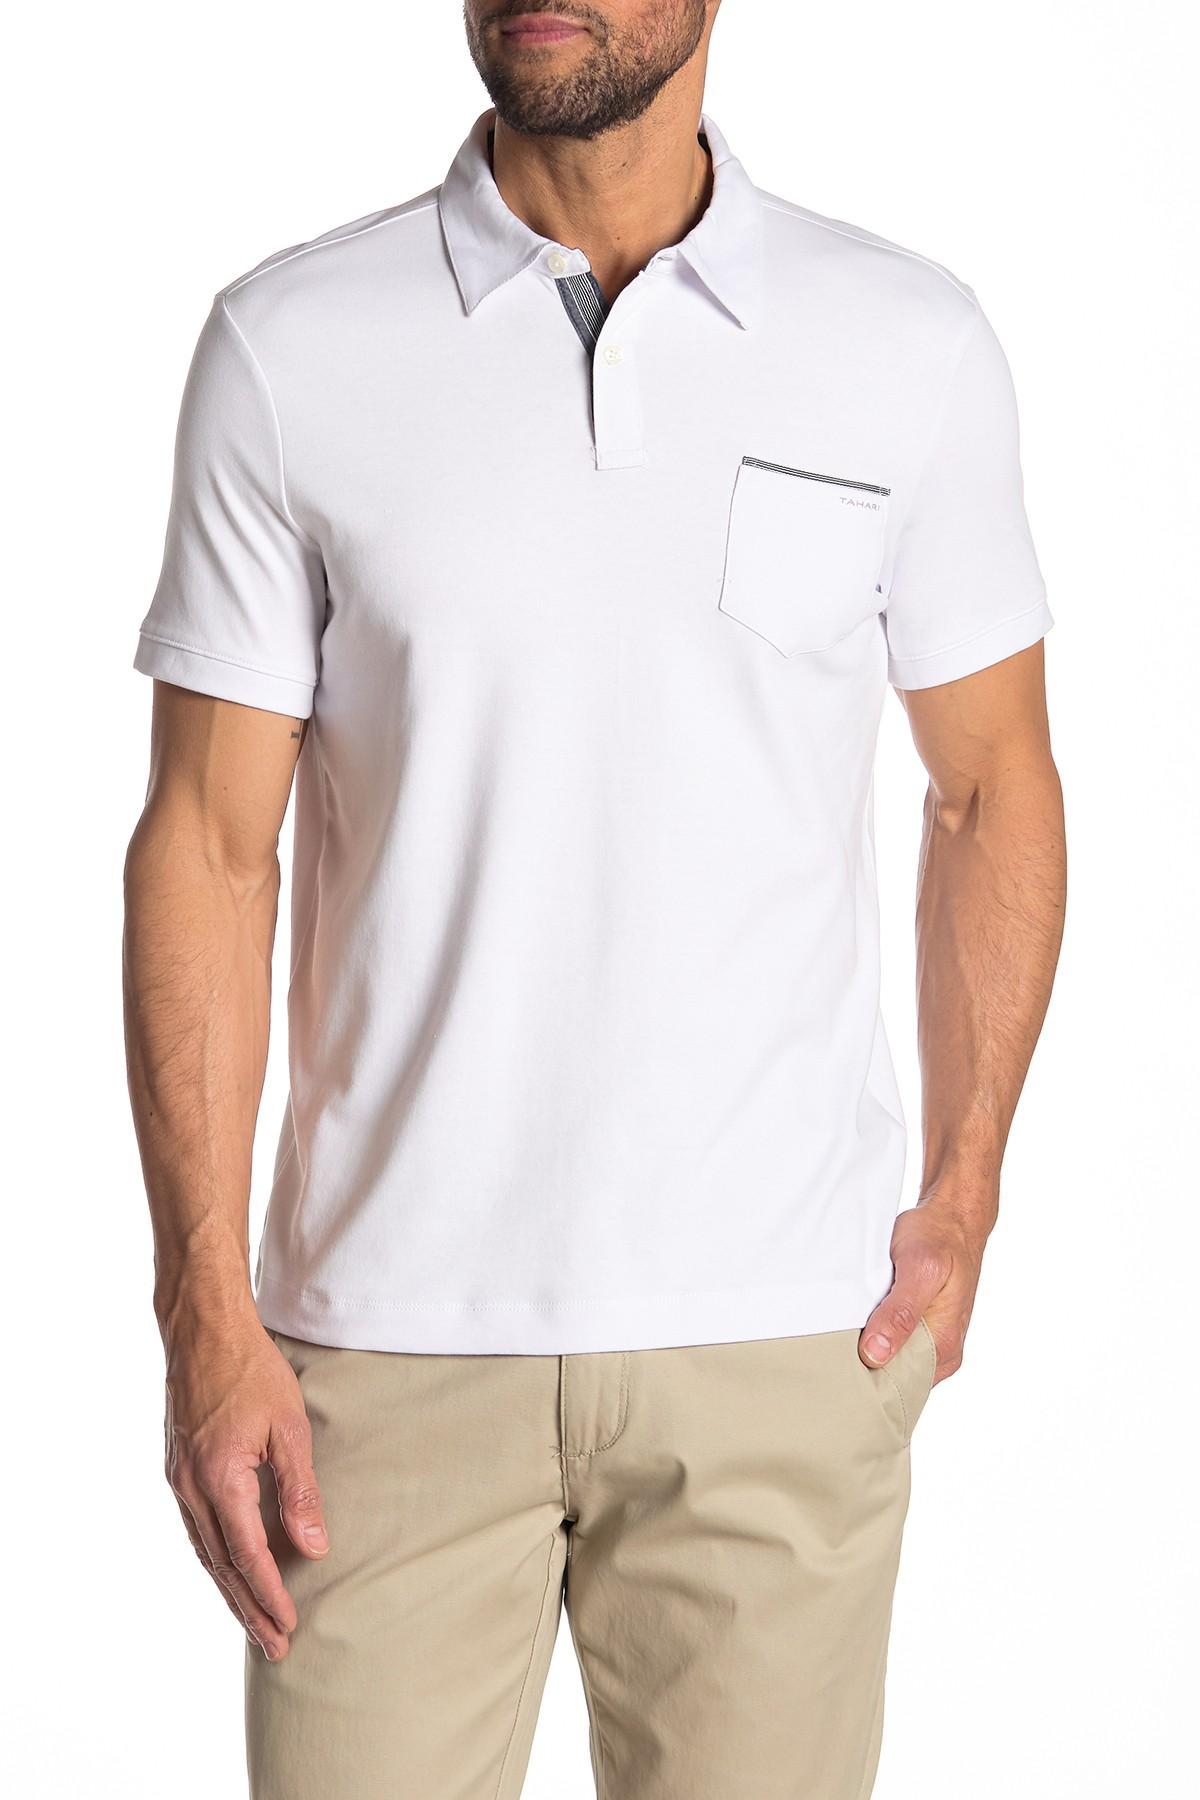 Tahari Cotton Pocket Polo Shirt in White for Men - Lyst